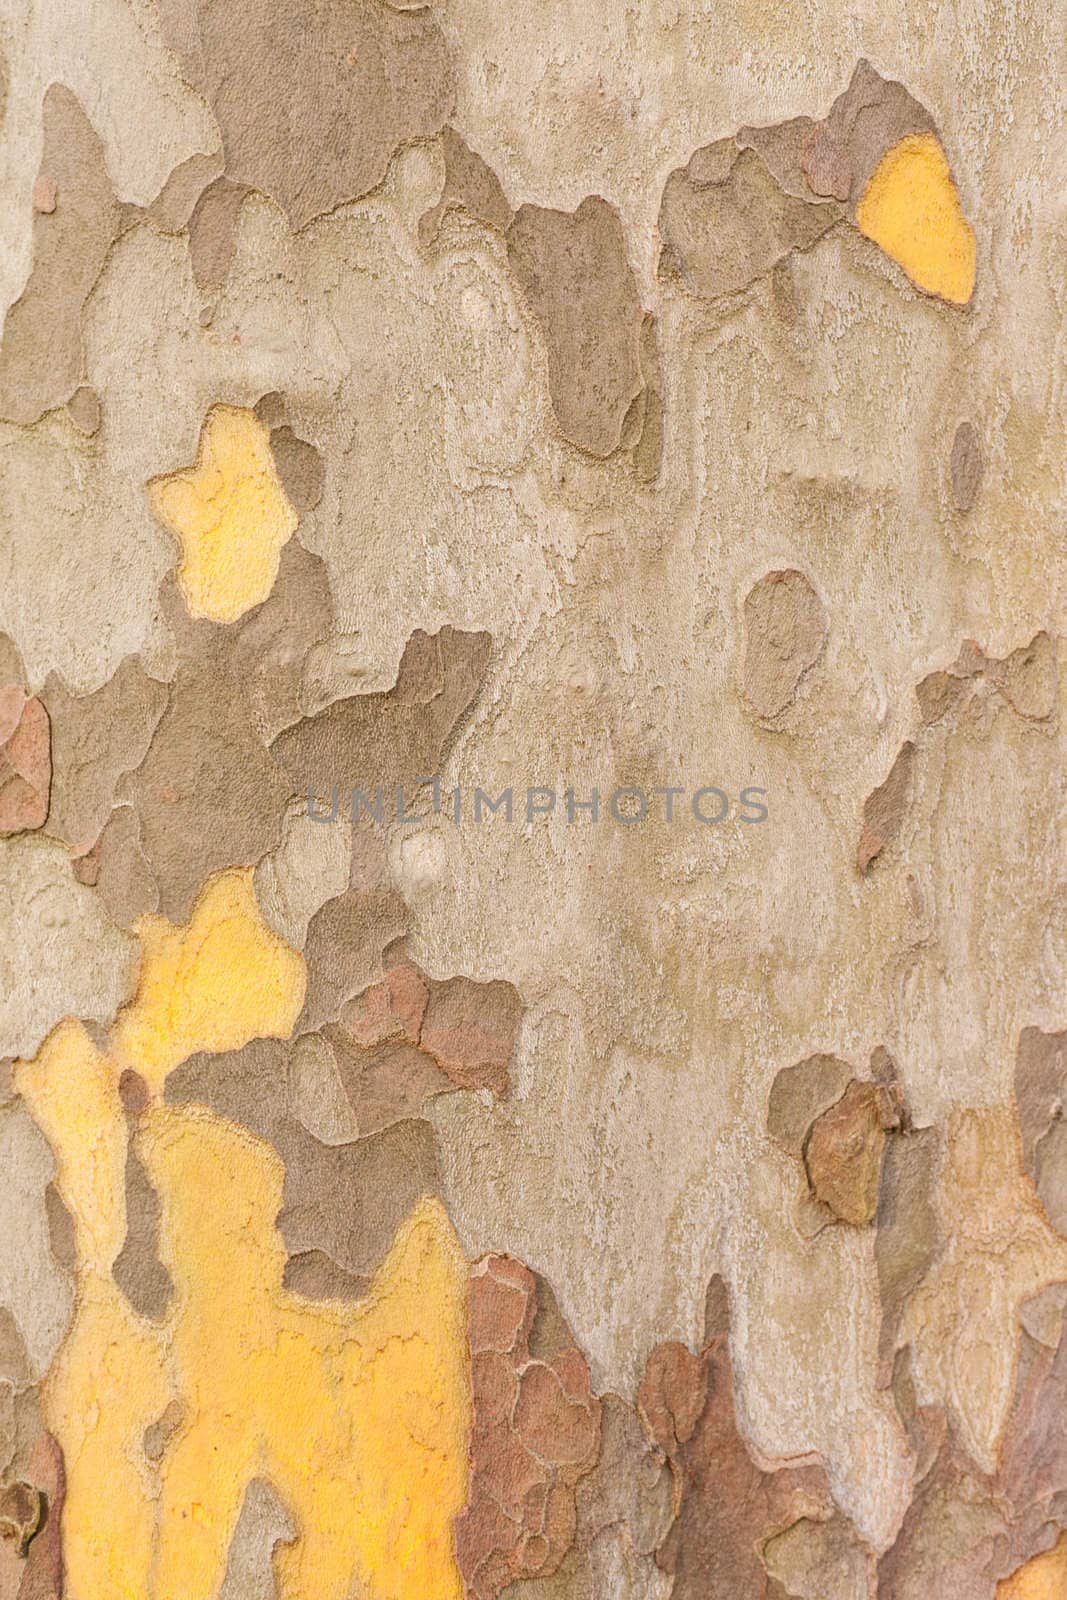 London Planetree (Platanus occidentalis) bark background texture pattern.